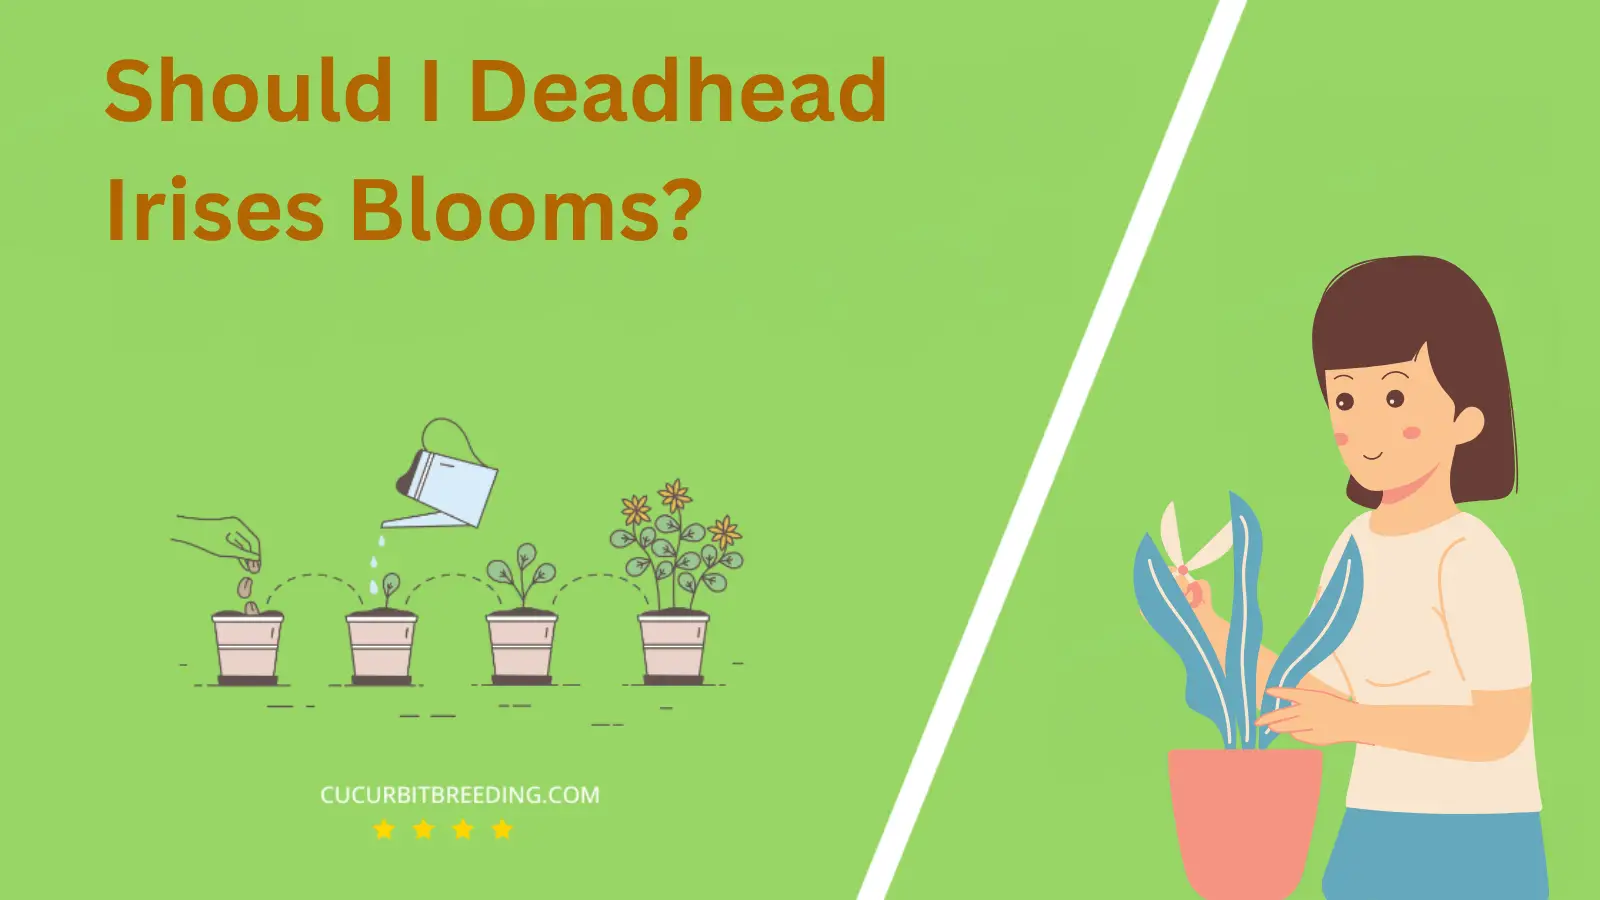 Should I Deadhead Irises Blooms?